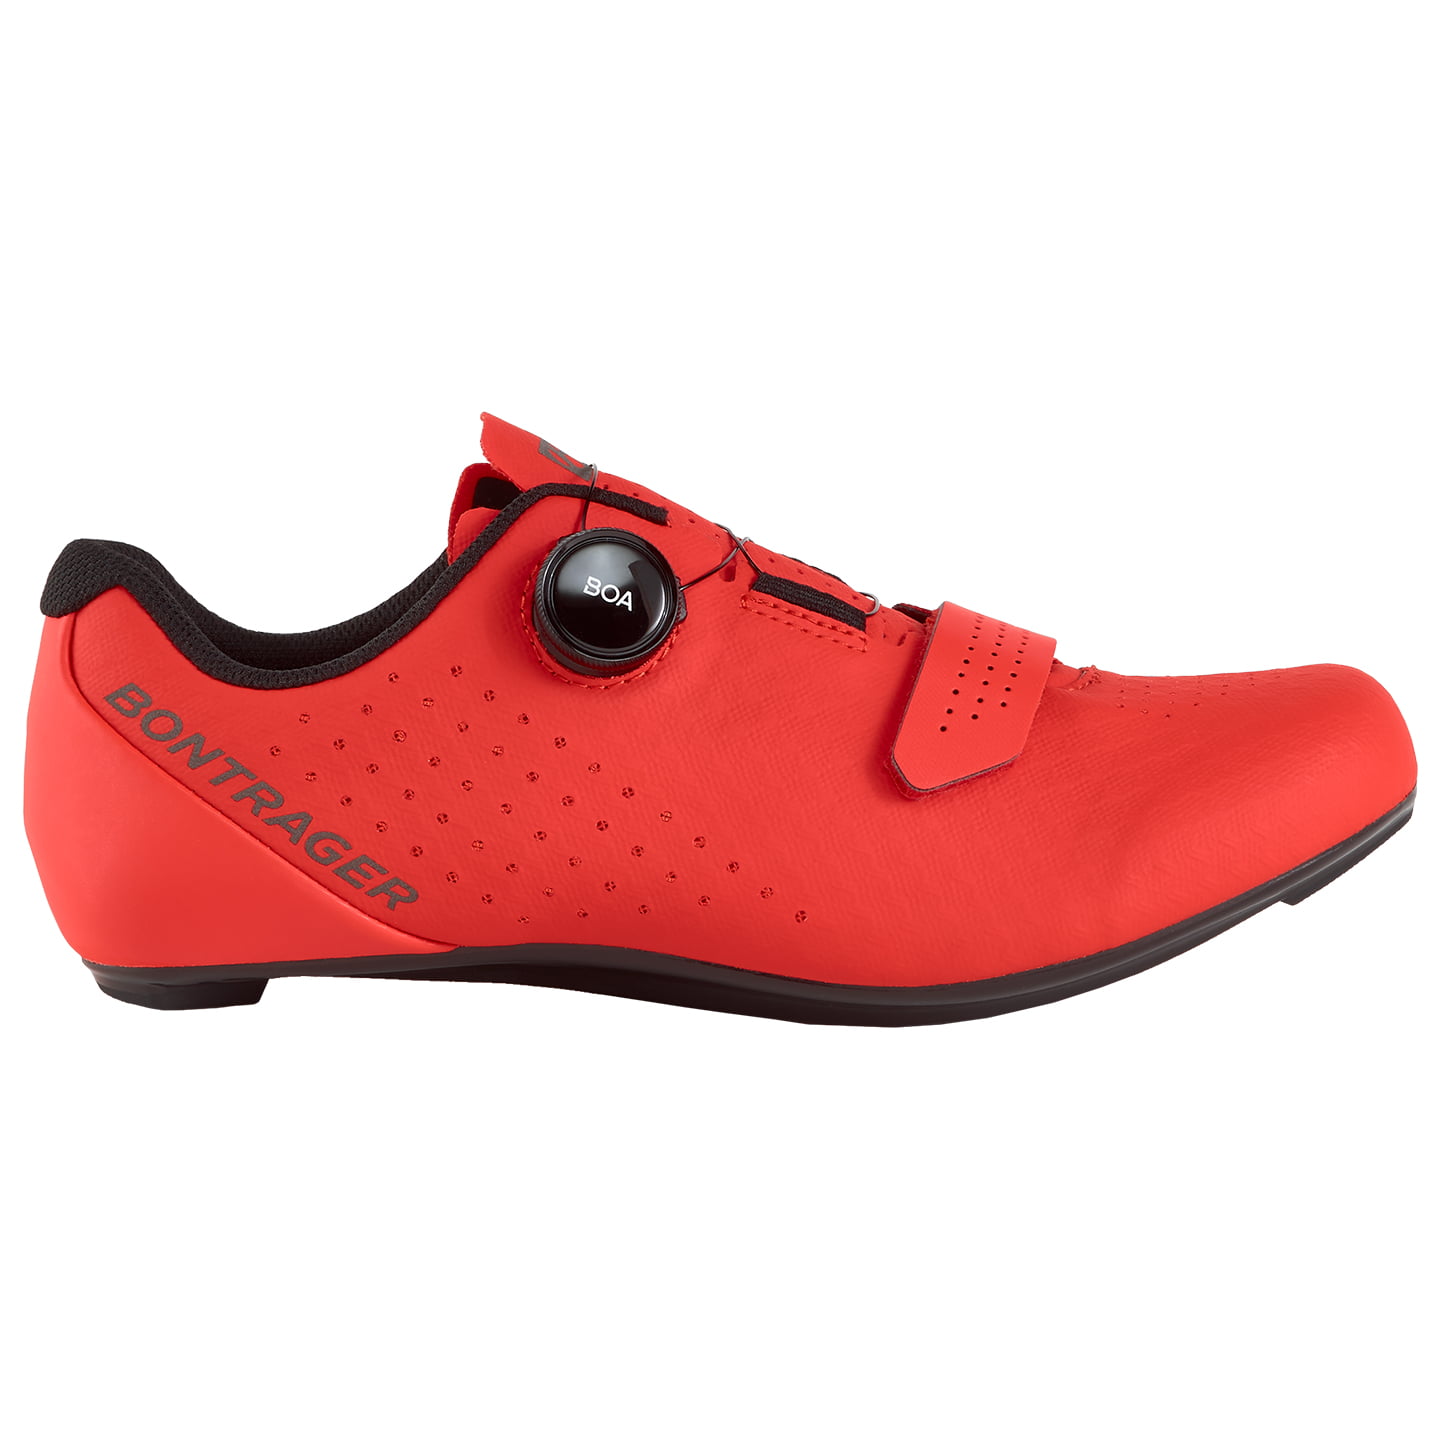 BONTRAGER Circuit Road Bike Shoes Road Shoes, for men, size 45, Cycling shoes